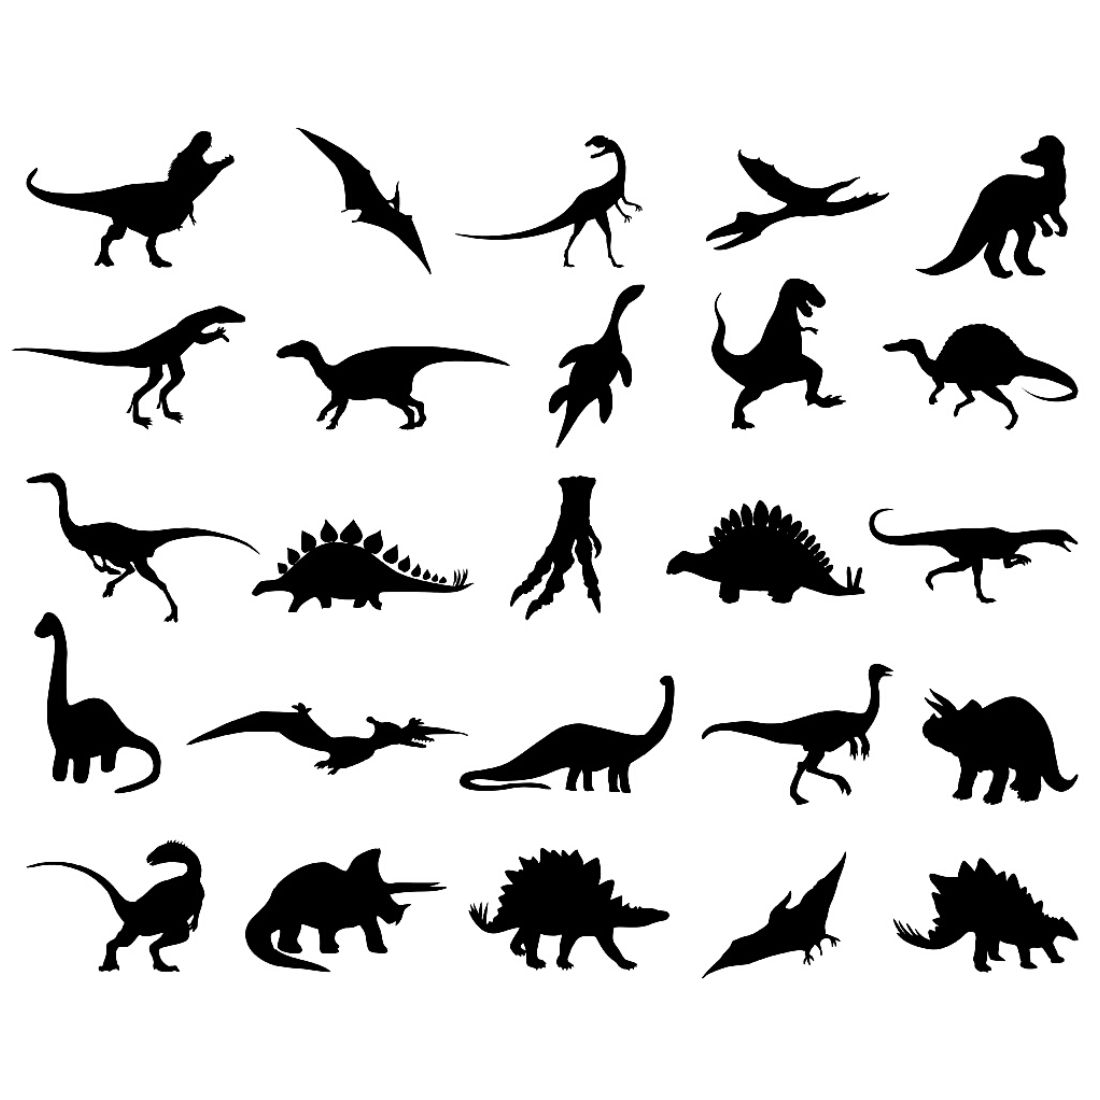 Dinosaur Silhouette Bundle cover image.